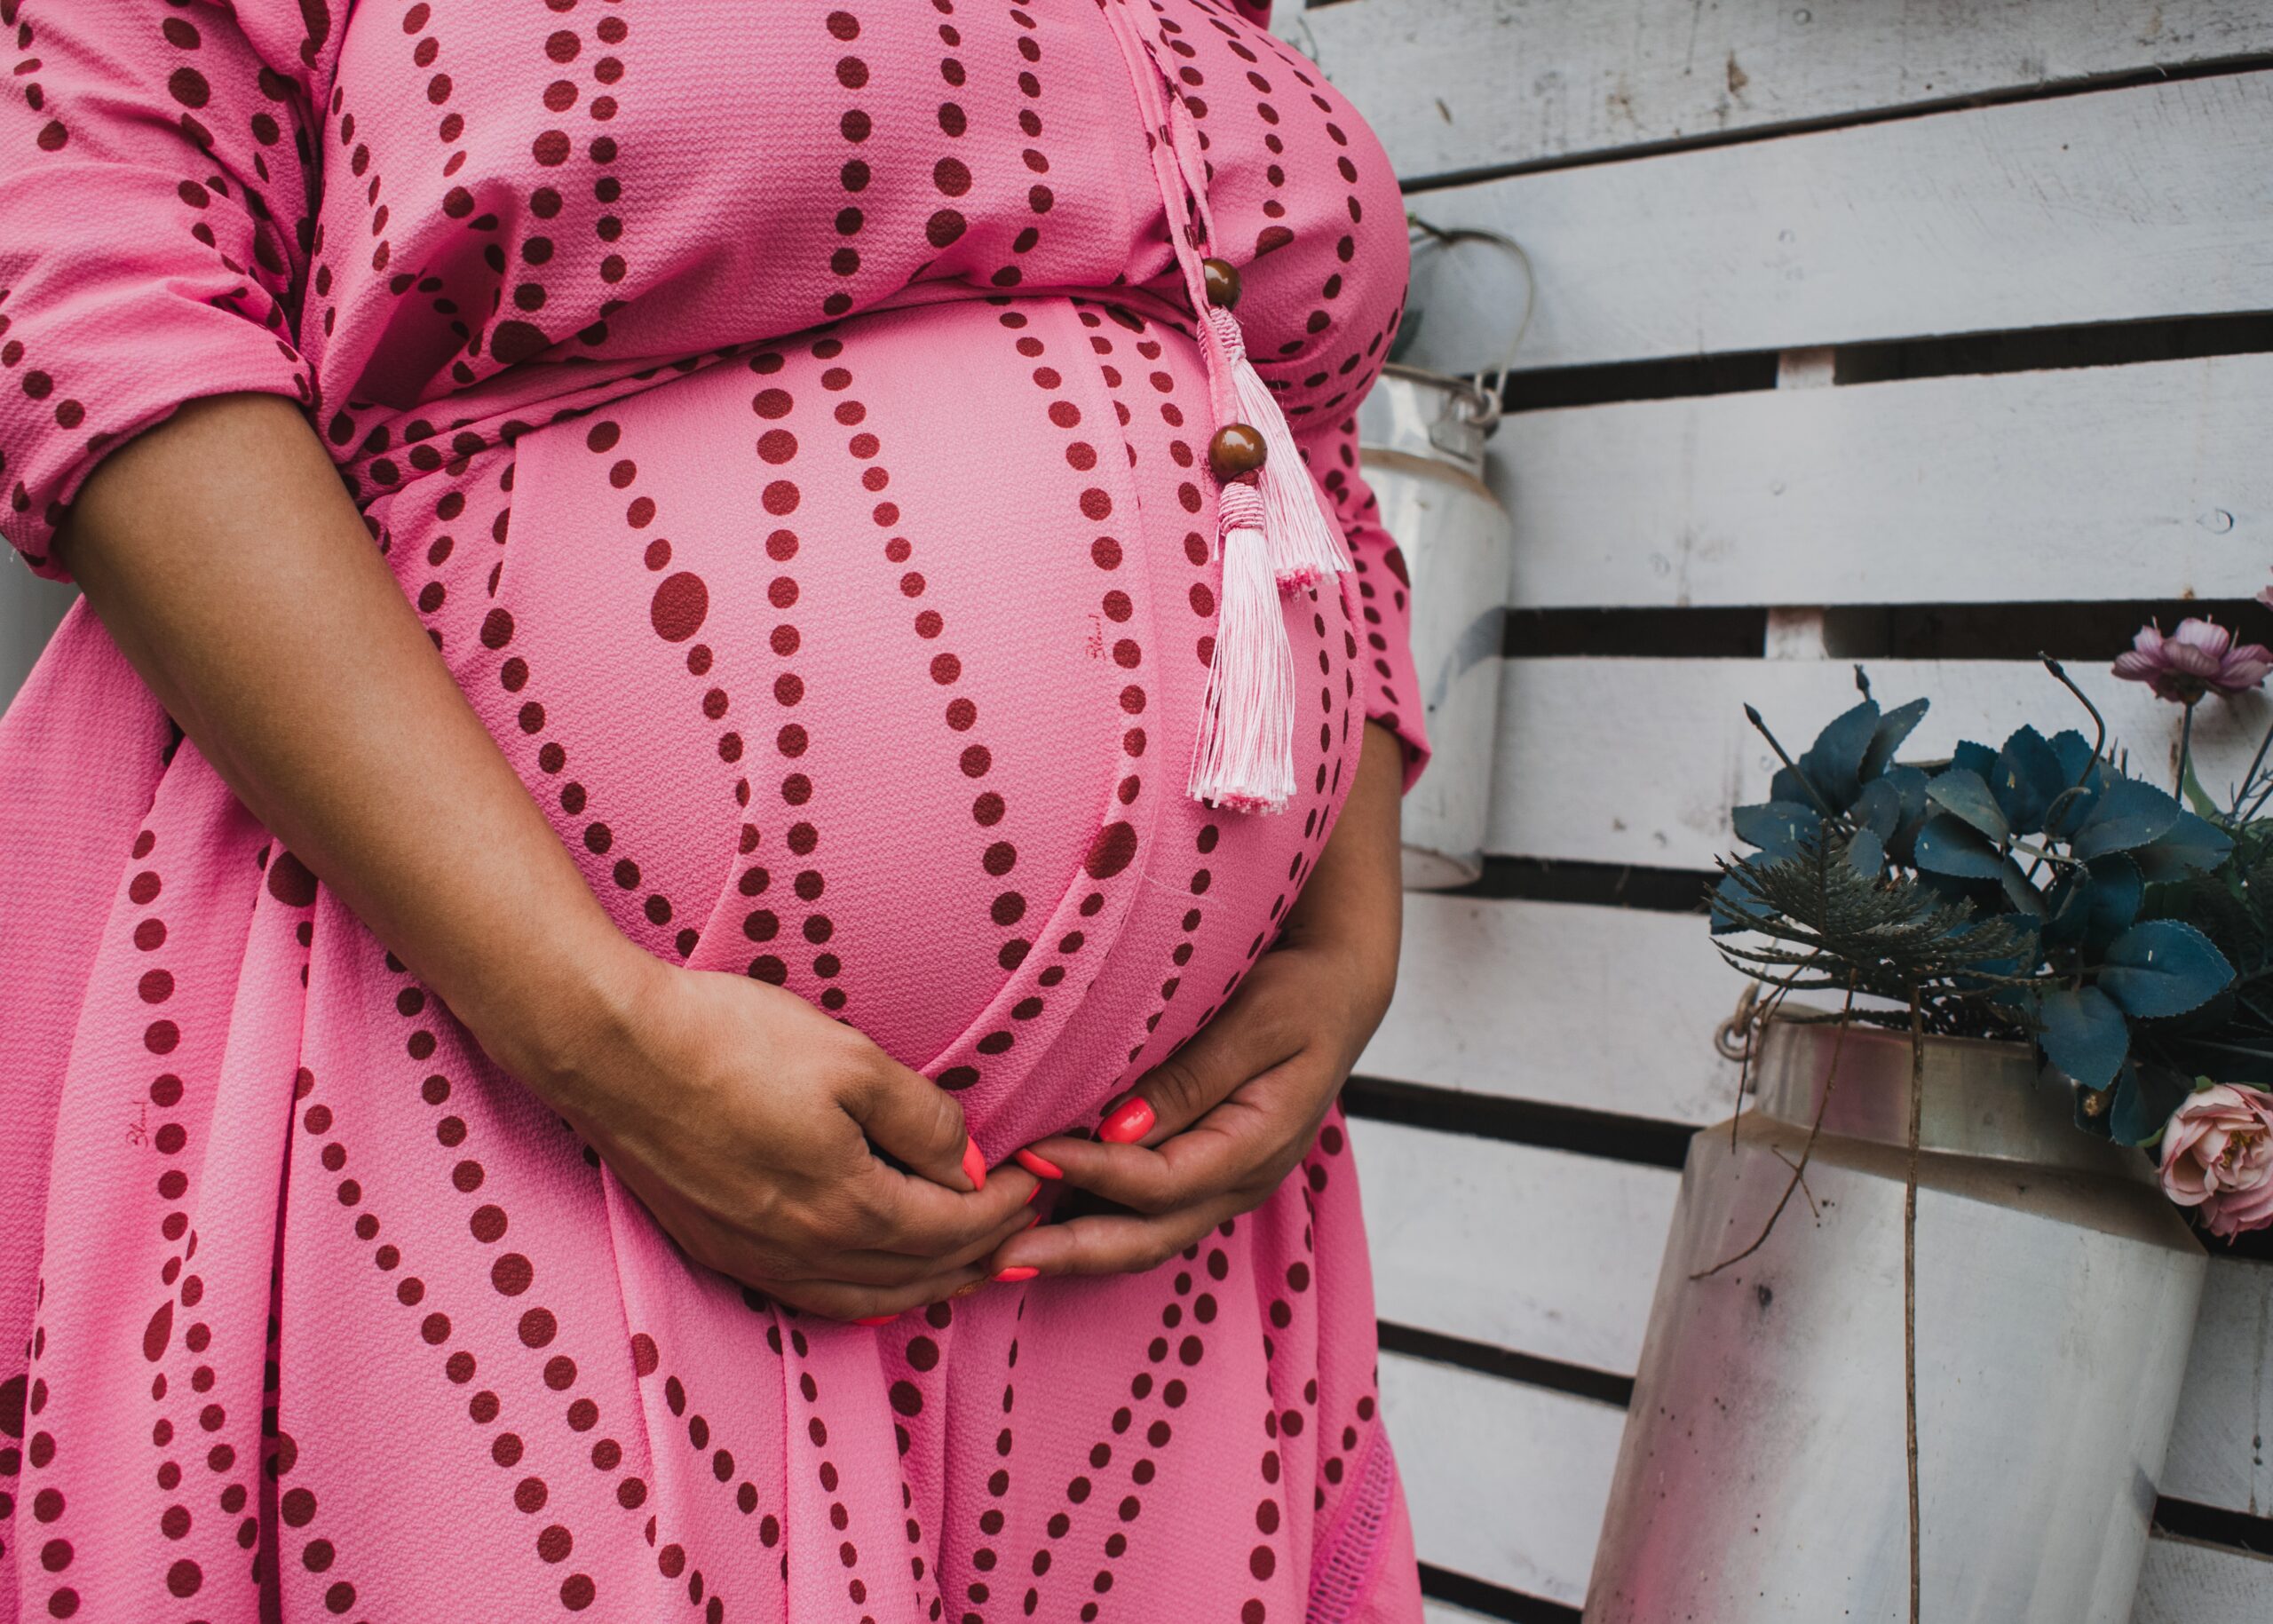 It’s Black Maternal Health Week – April 11-17, 2022